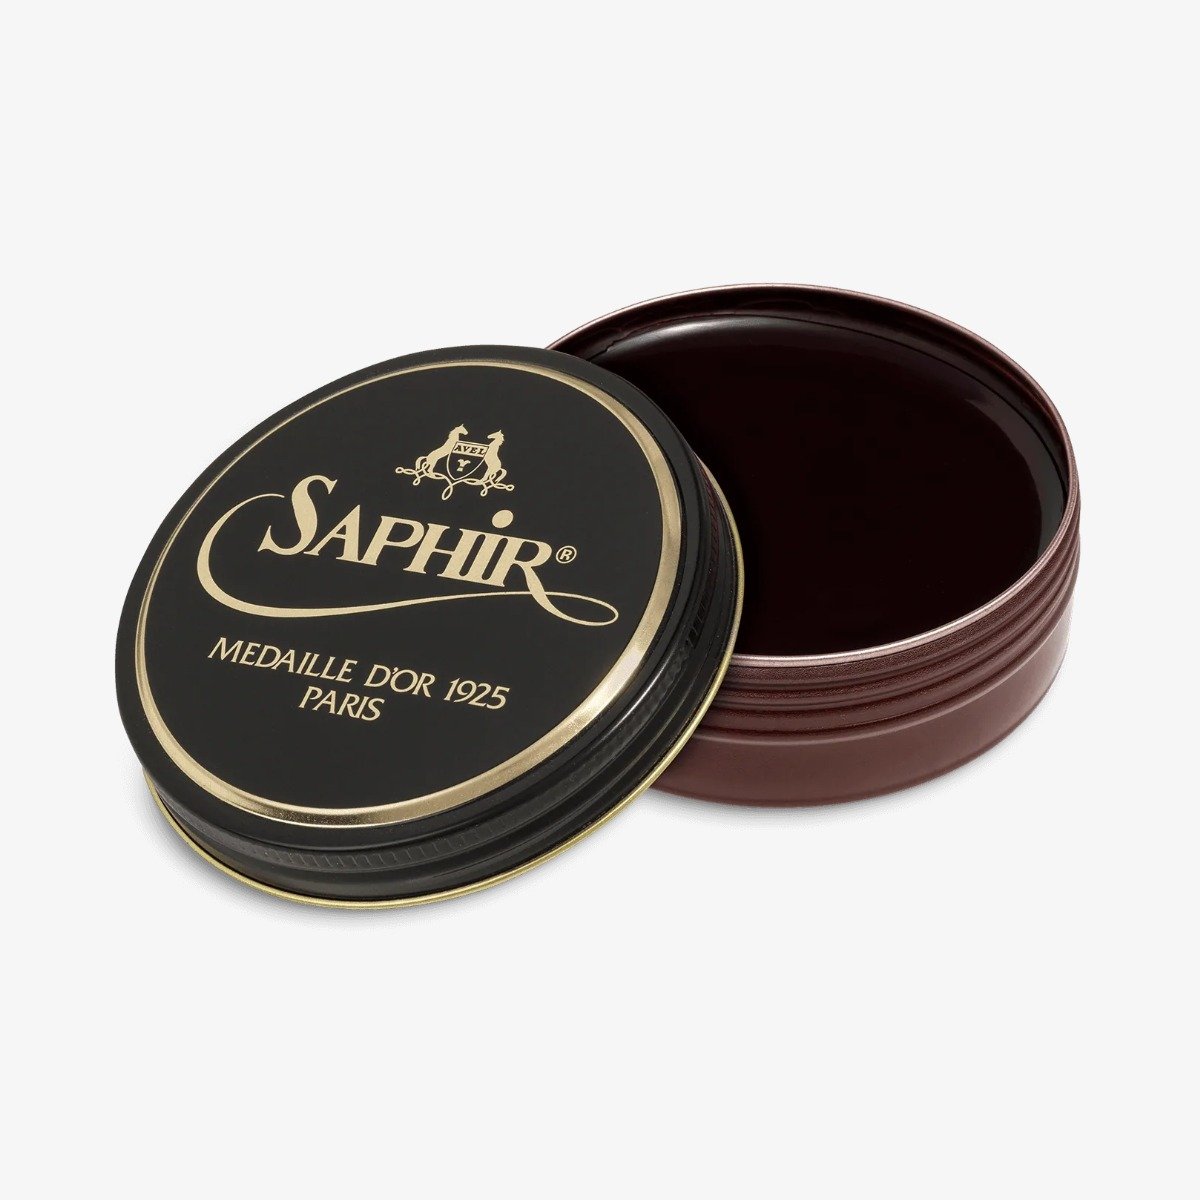 Saphir Pâte De Luxe mahogany wax polish